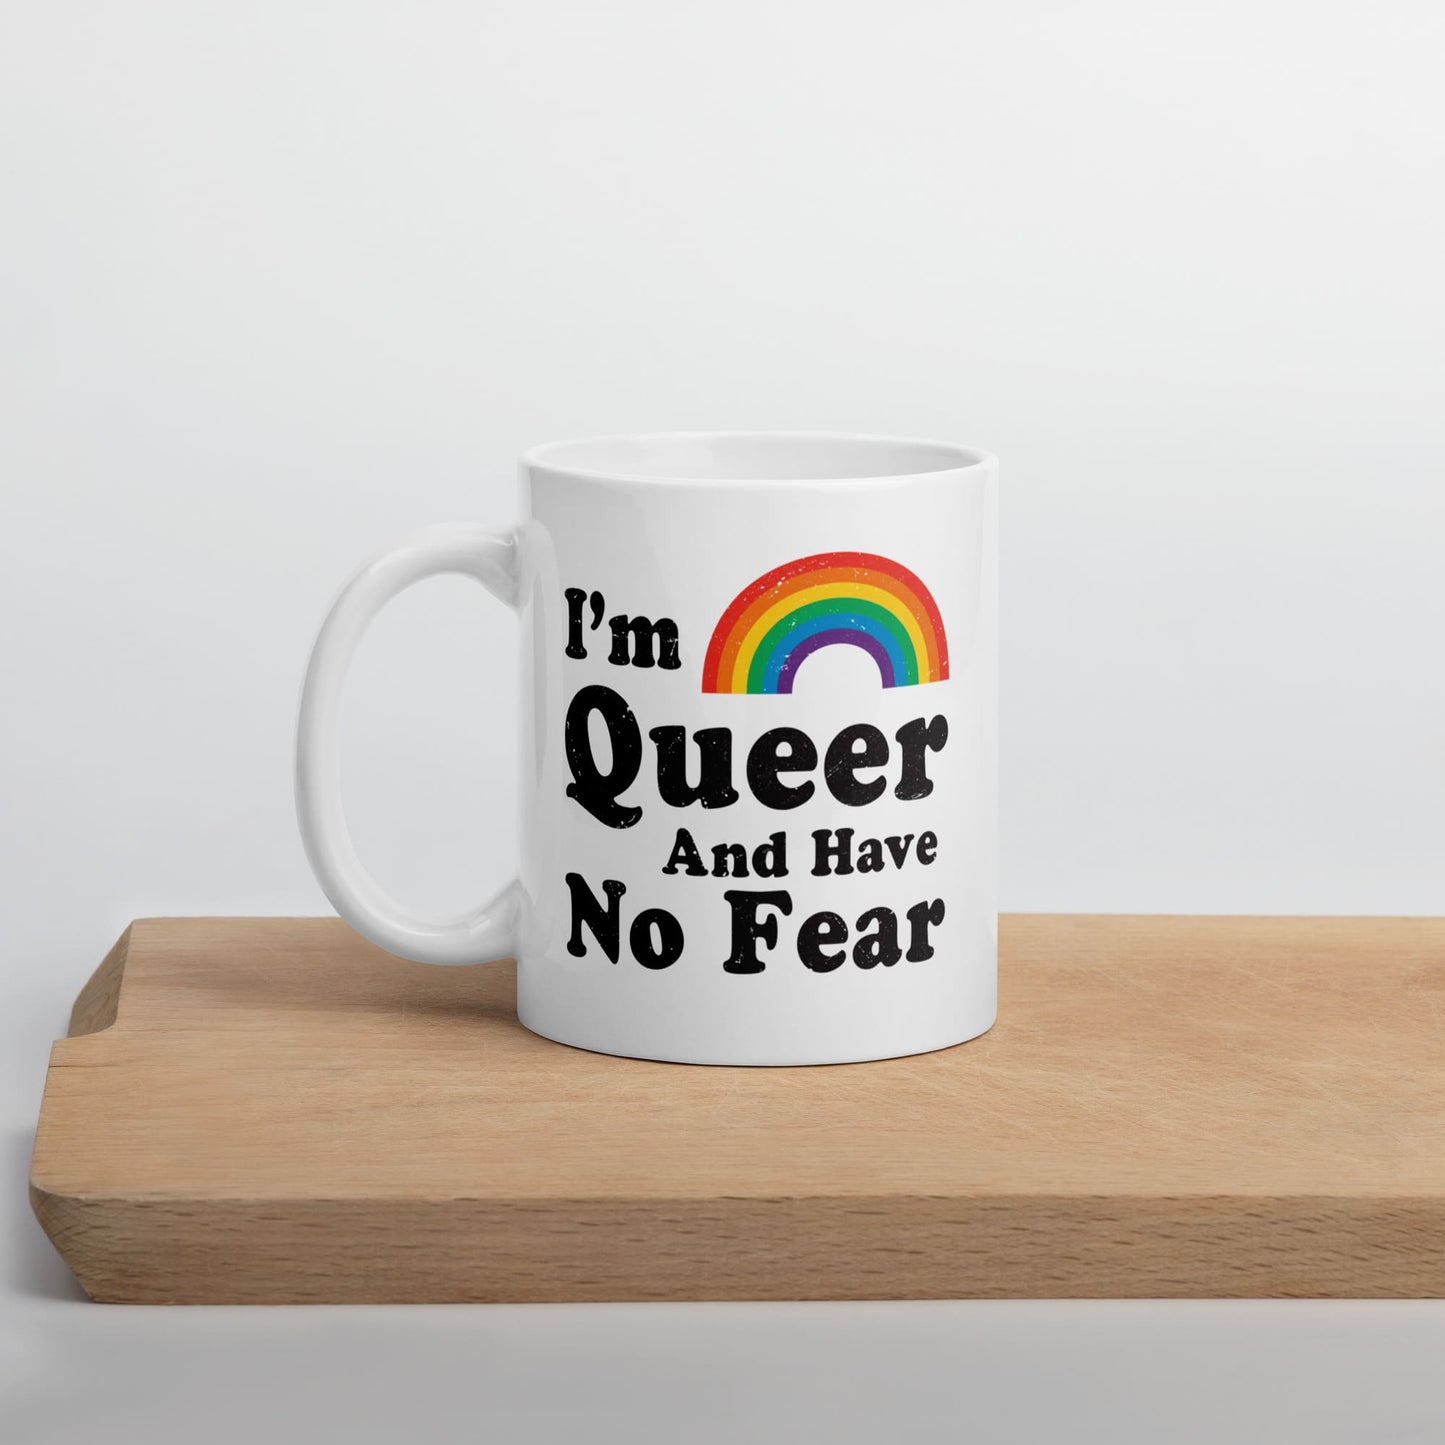 queer mug, funny LGBTQ coffee or tea cup on table